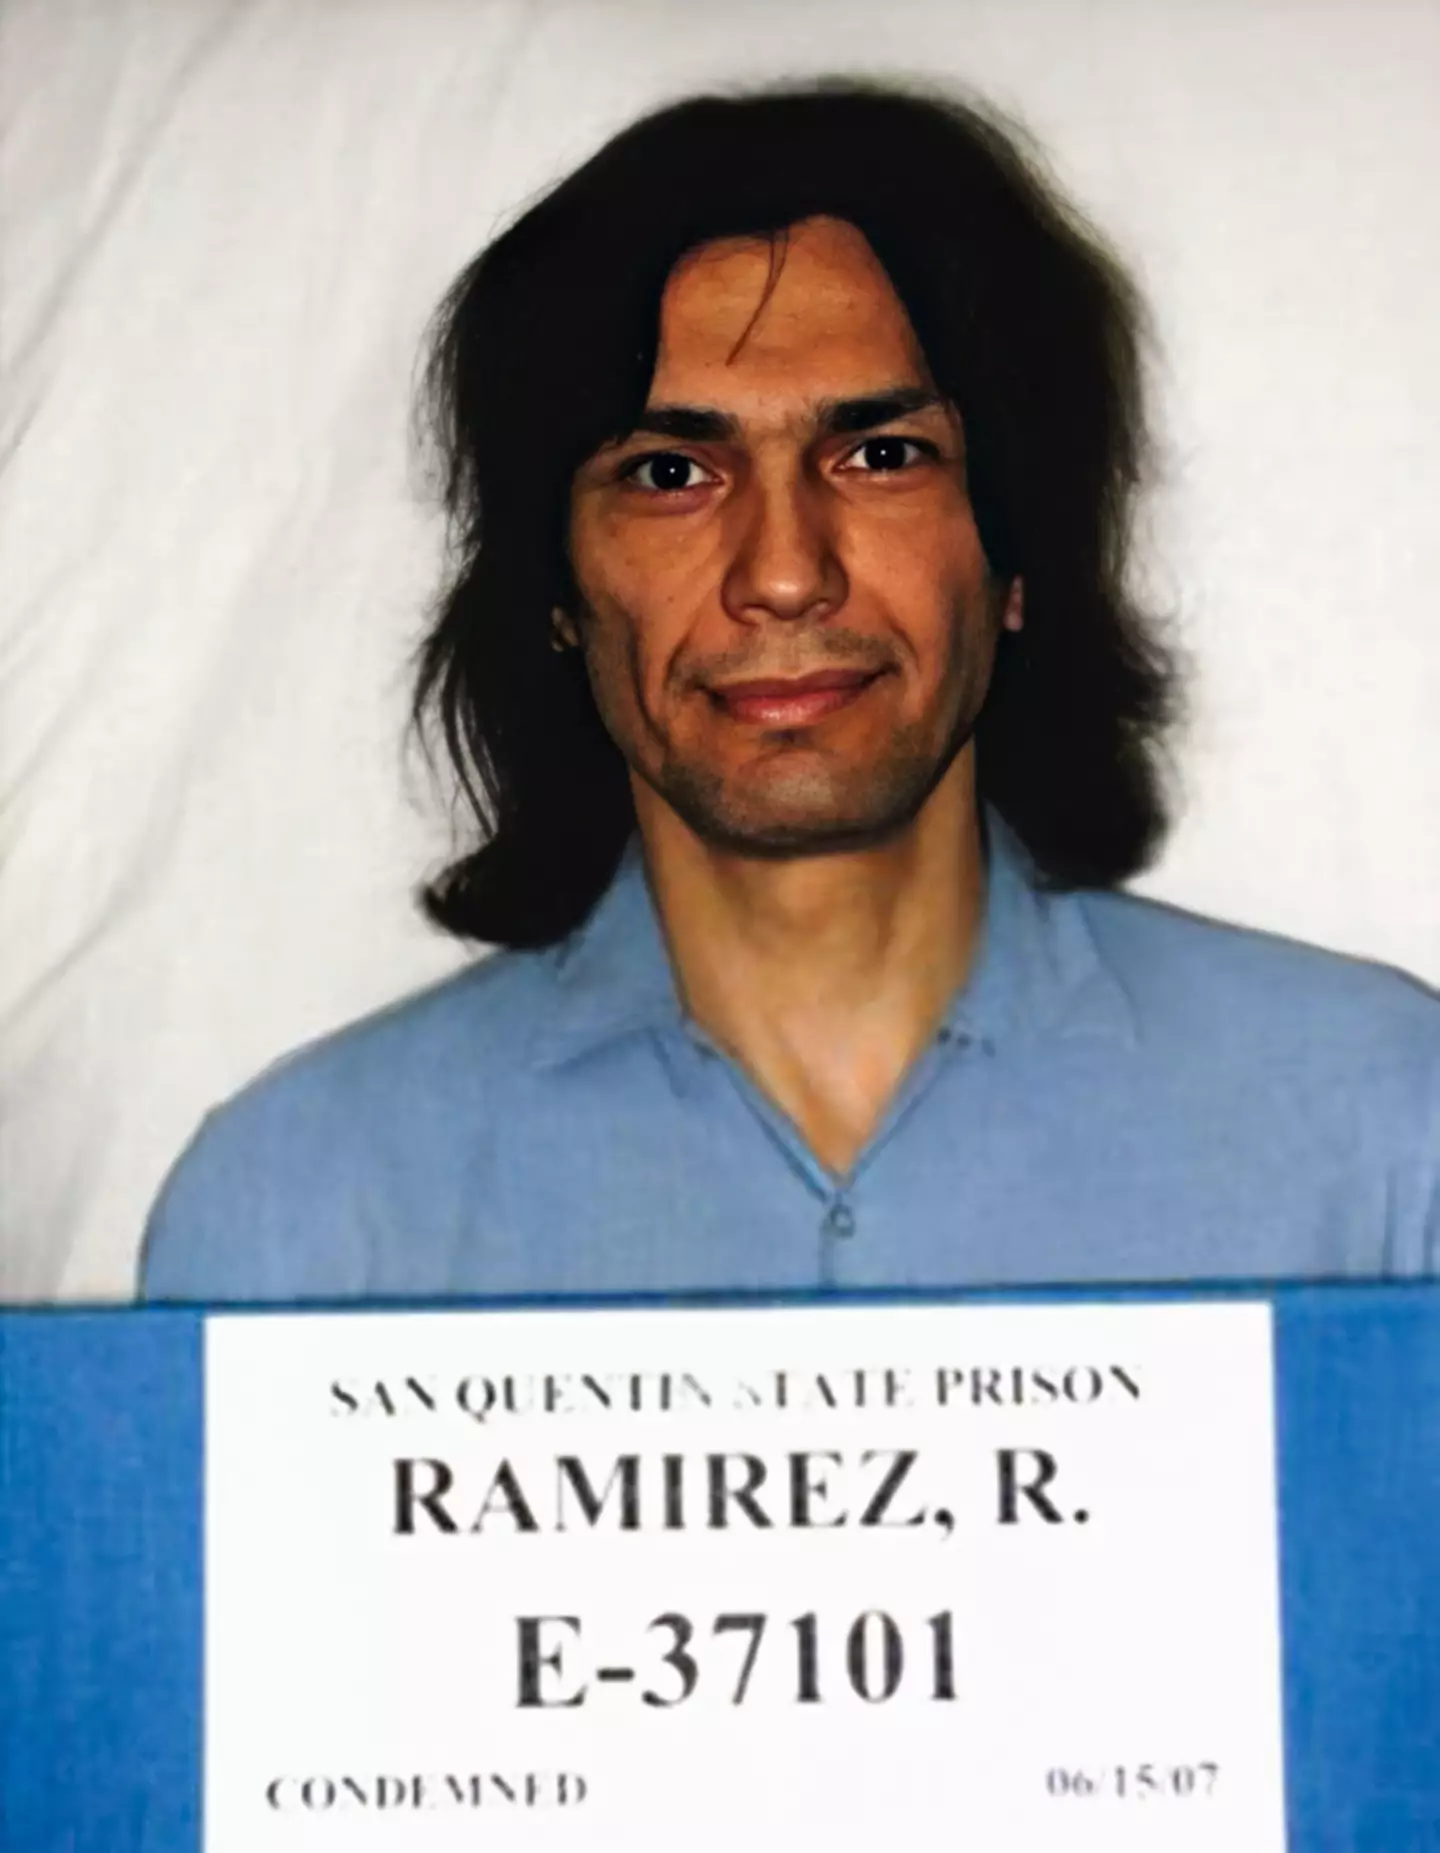 Richard Ramirez was housed at San Quentin.